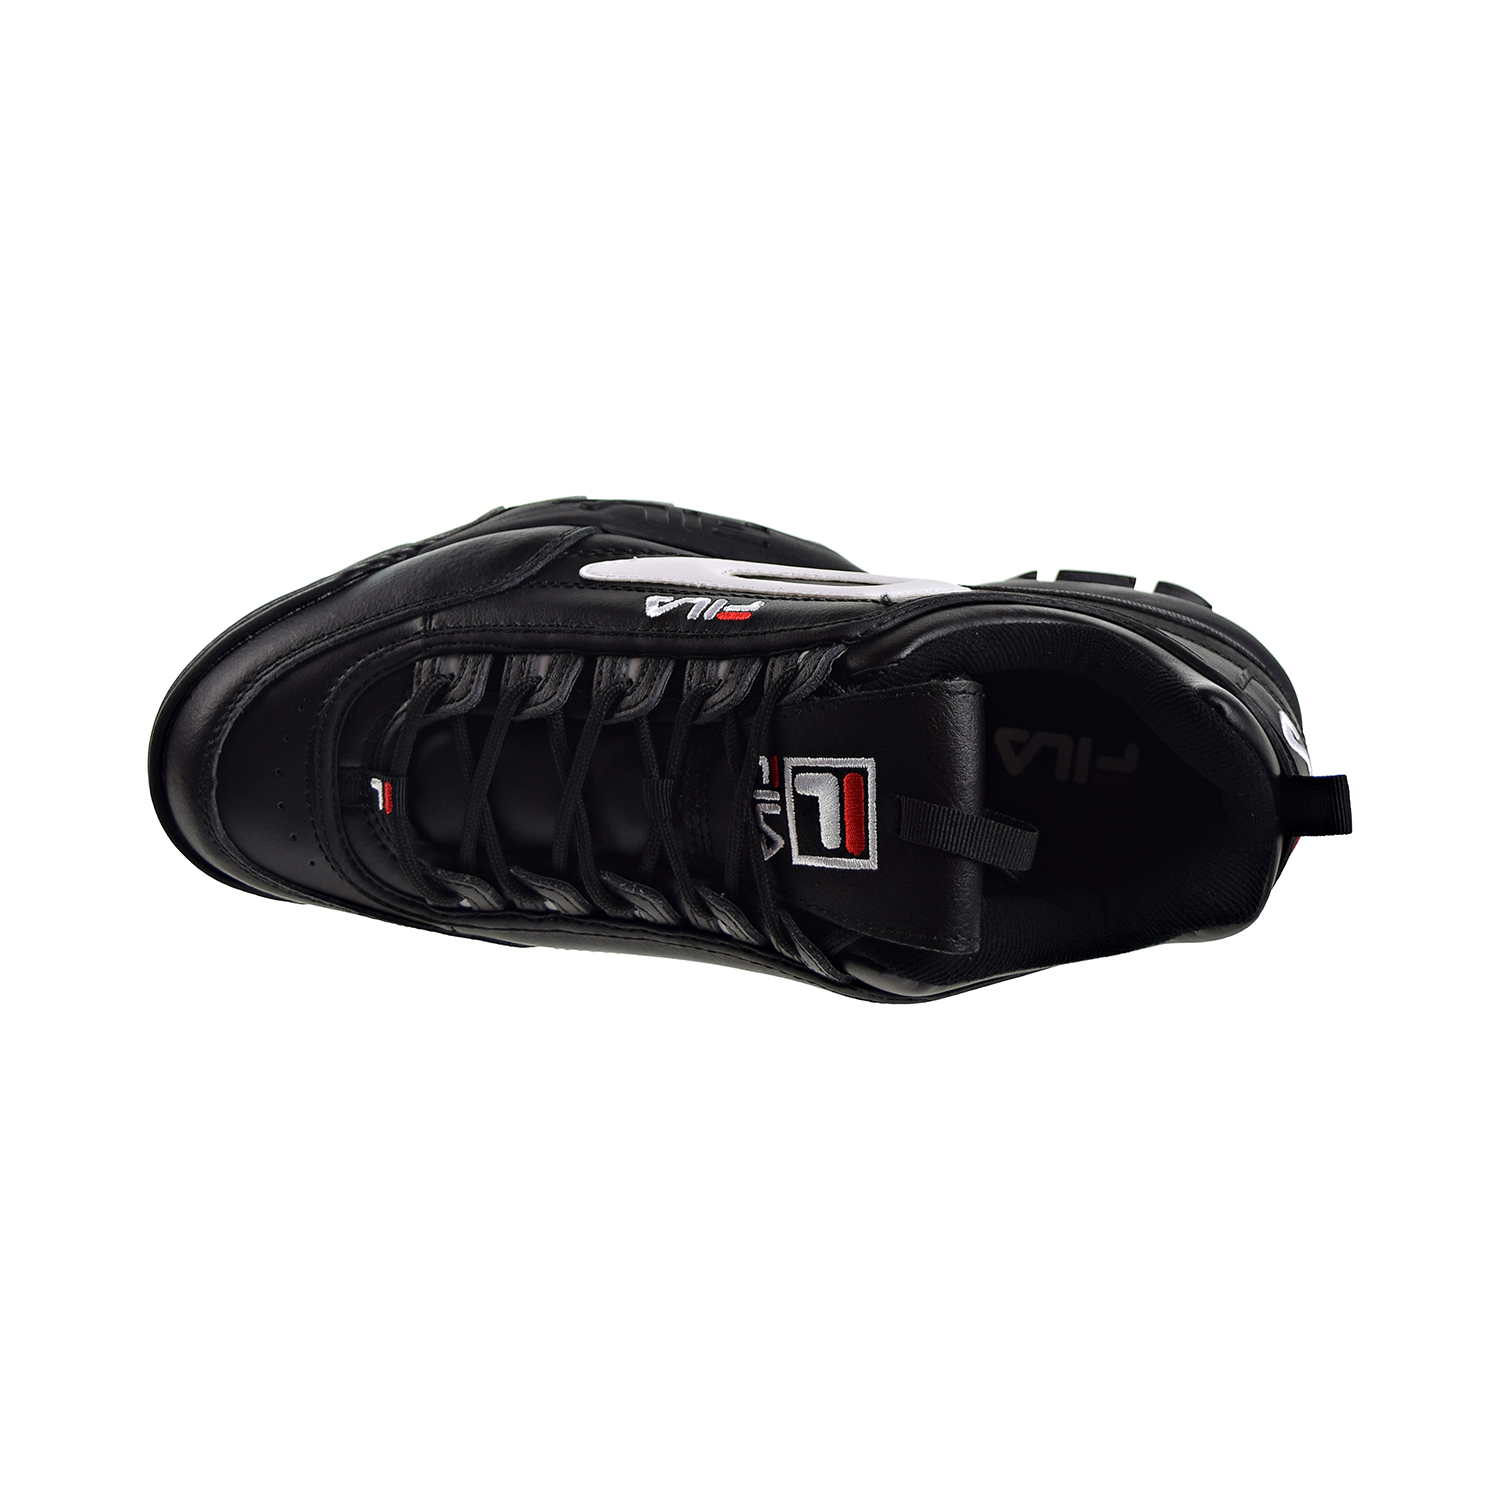 Fila Disruptor II Premium Mens Shoes Black/White/Red  1fm00139-014